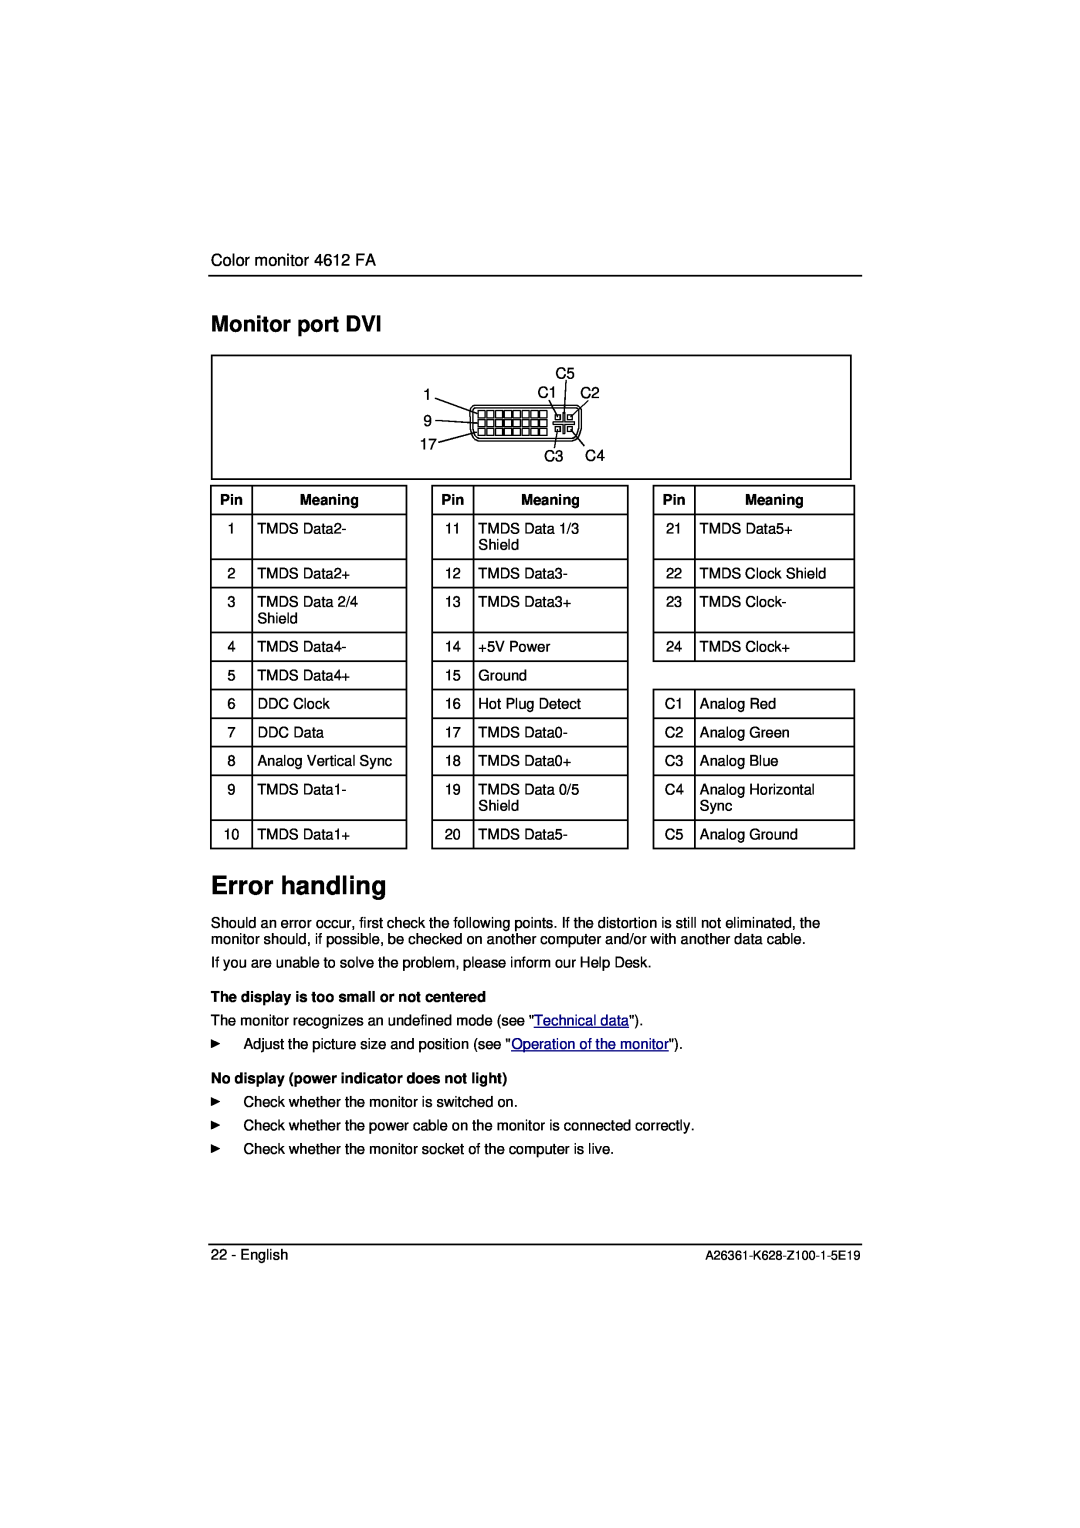 Fujitsu Siemens Computers manual Error handling, Monitor port DVI, Color monitor 4612 FA 